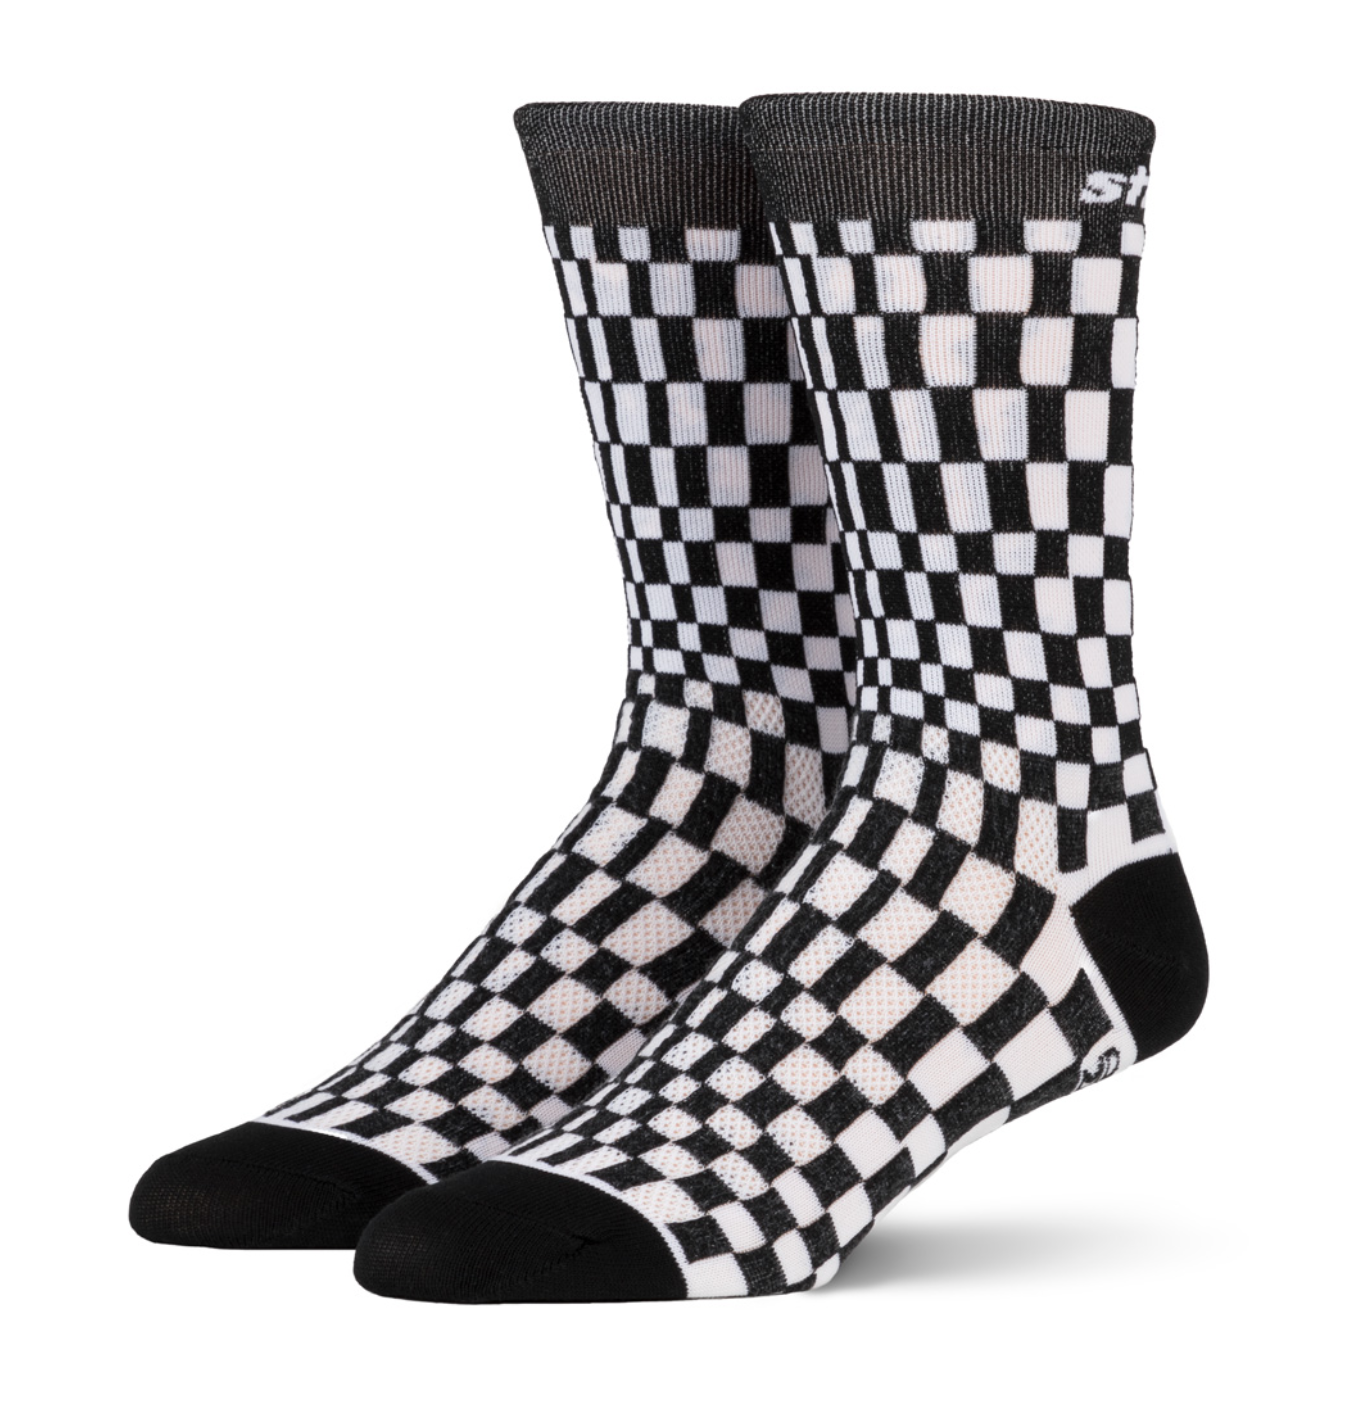 Pasha socks.. - Rennlist - Porsche Discussion Forums